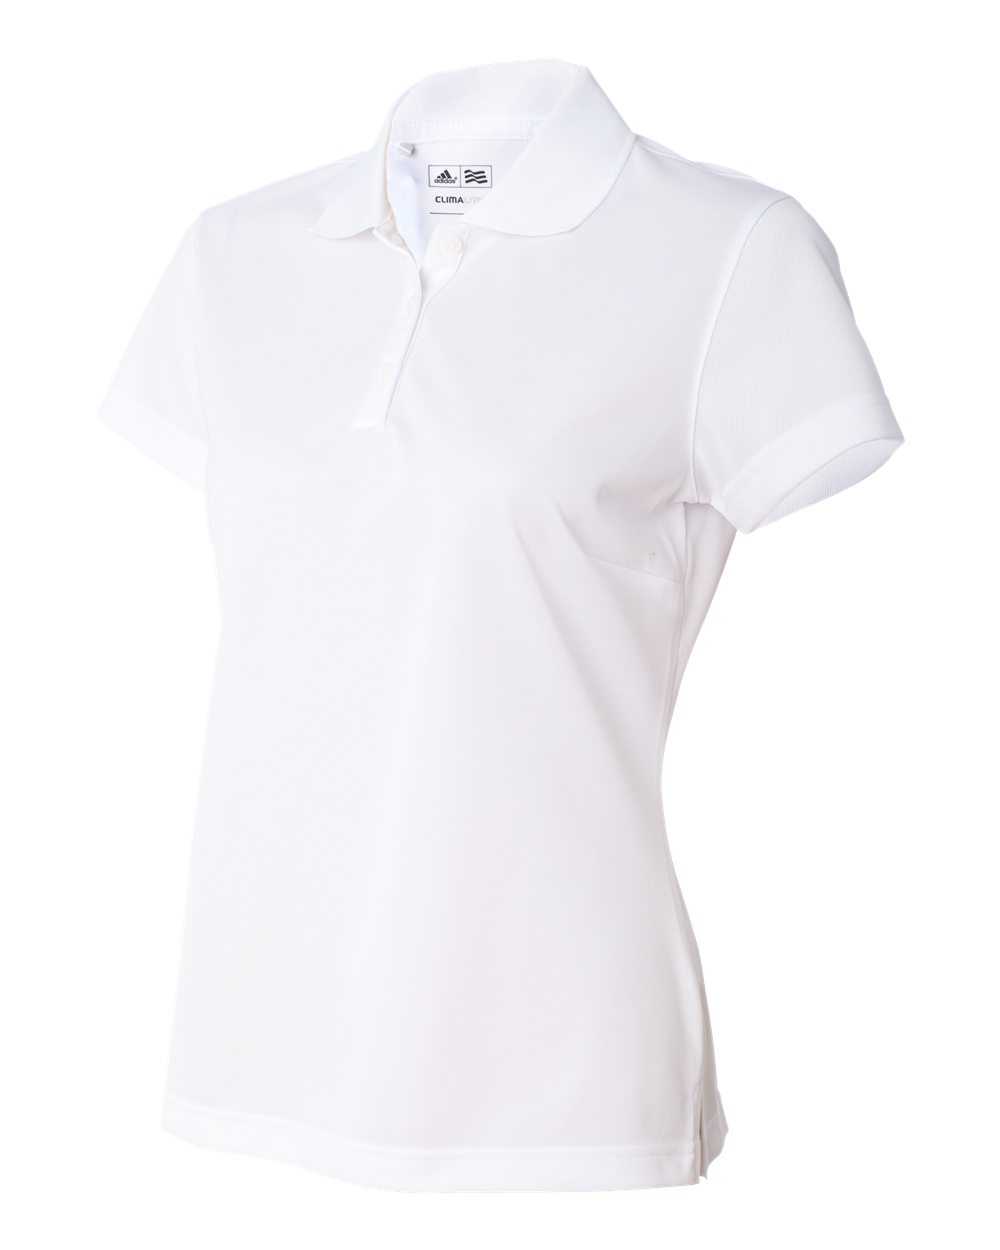 Adidas A131 Women's Basic Sport Shirt - White Black - HIT a Double